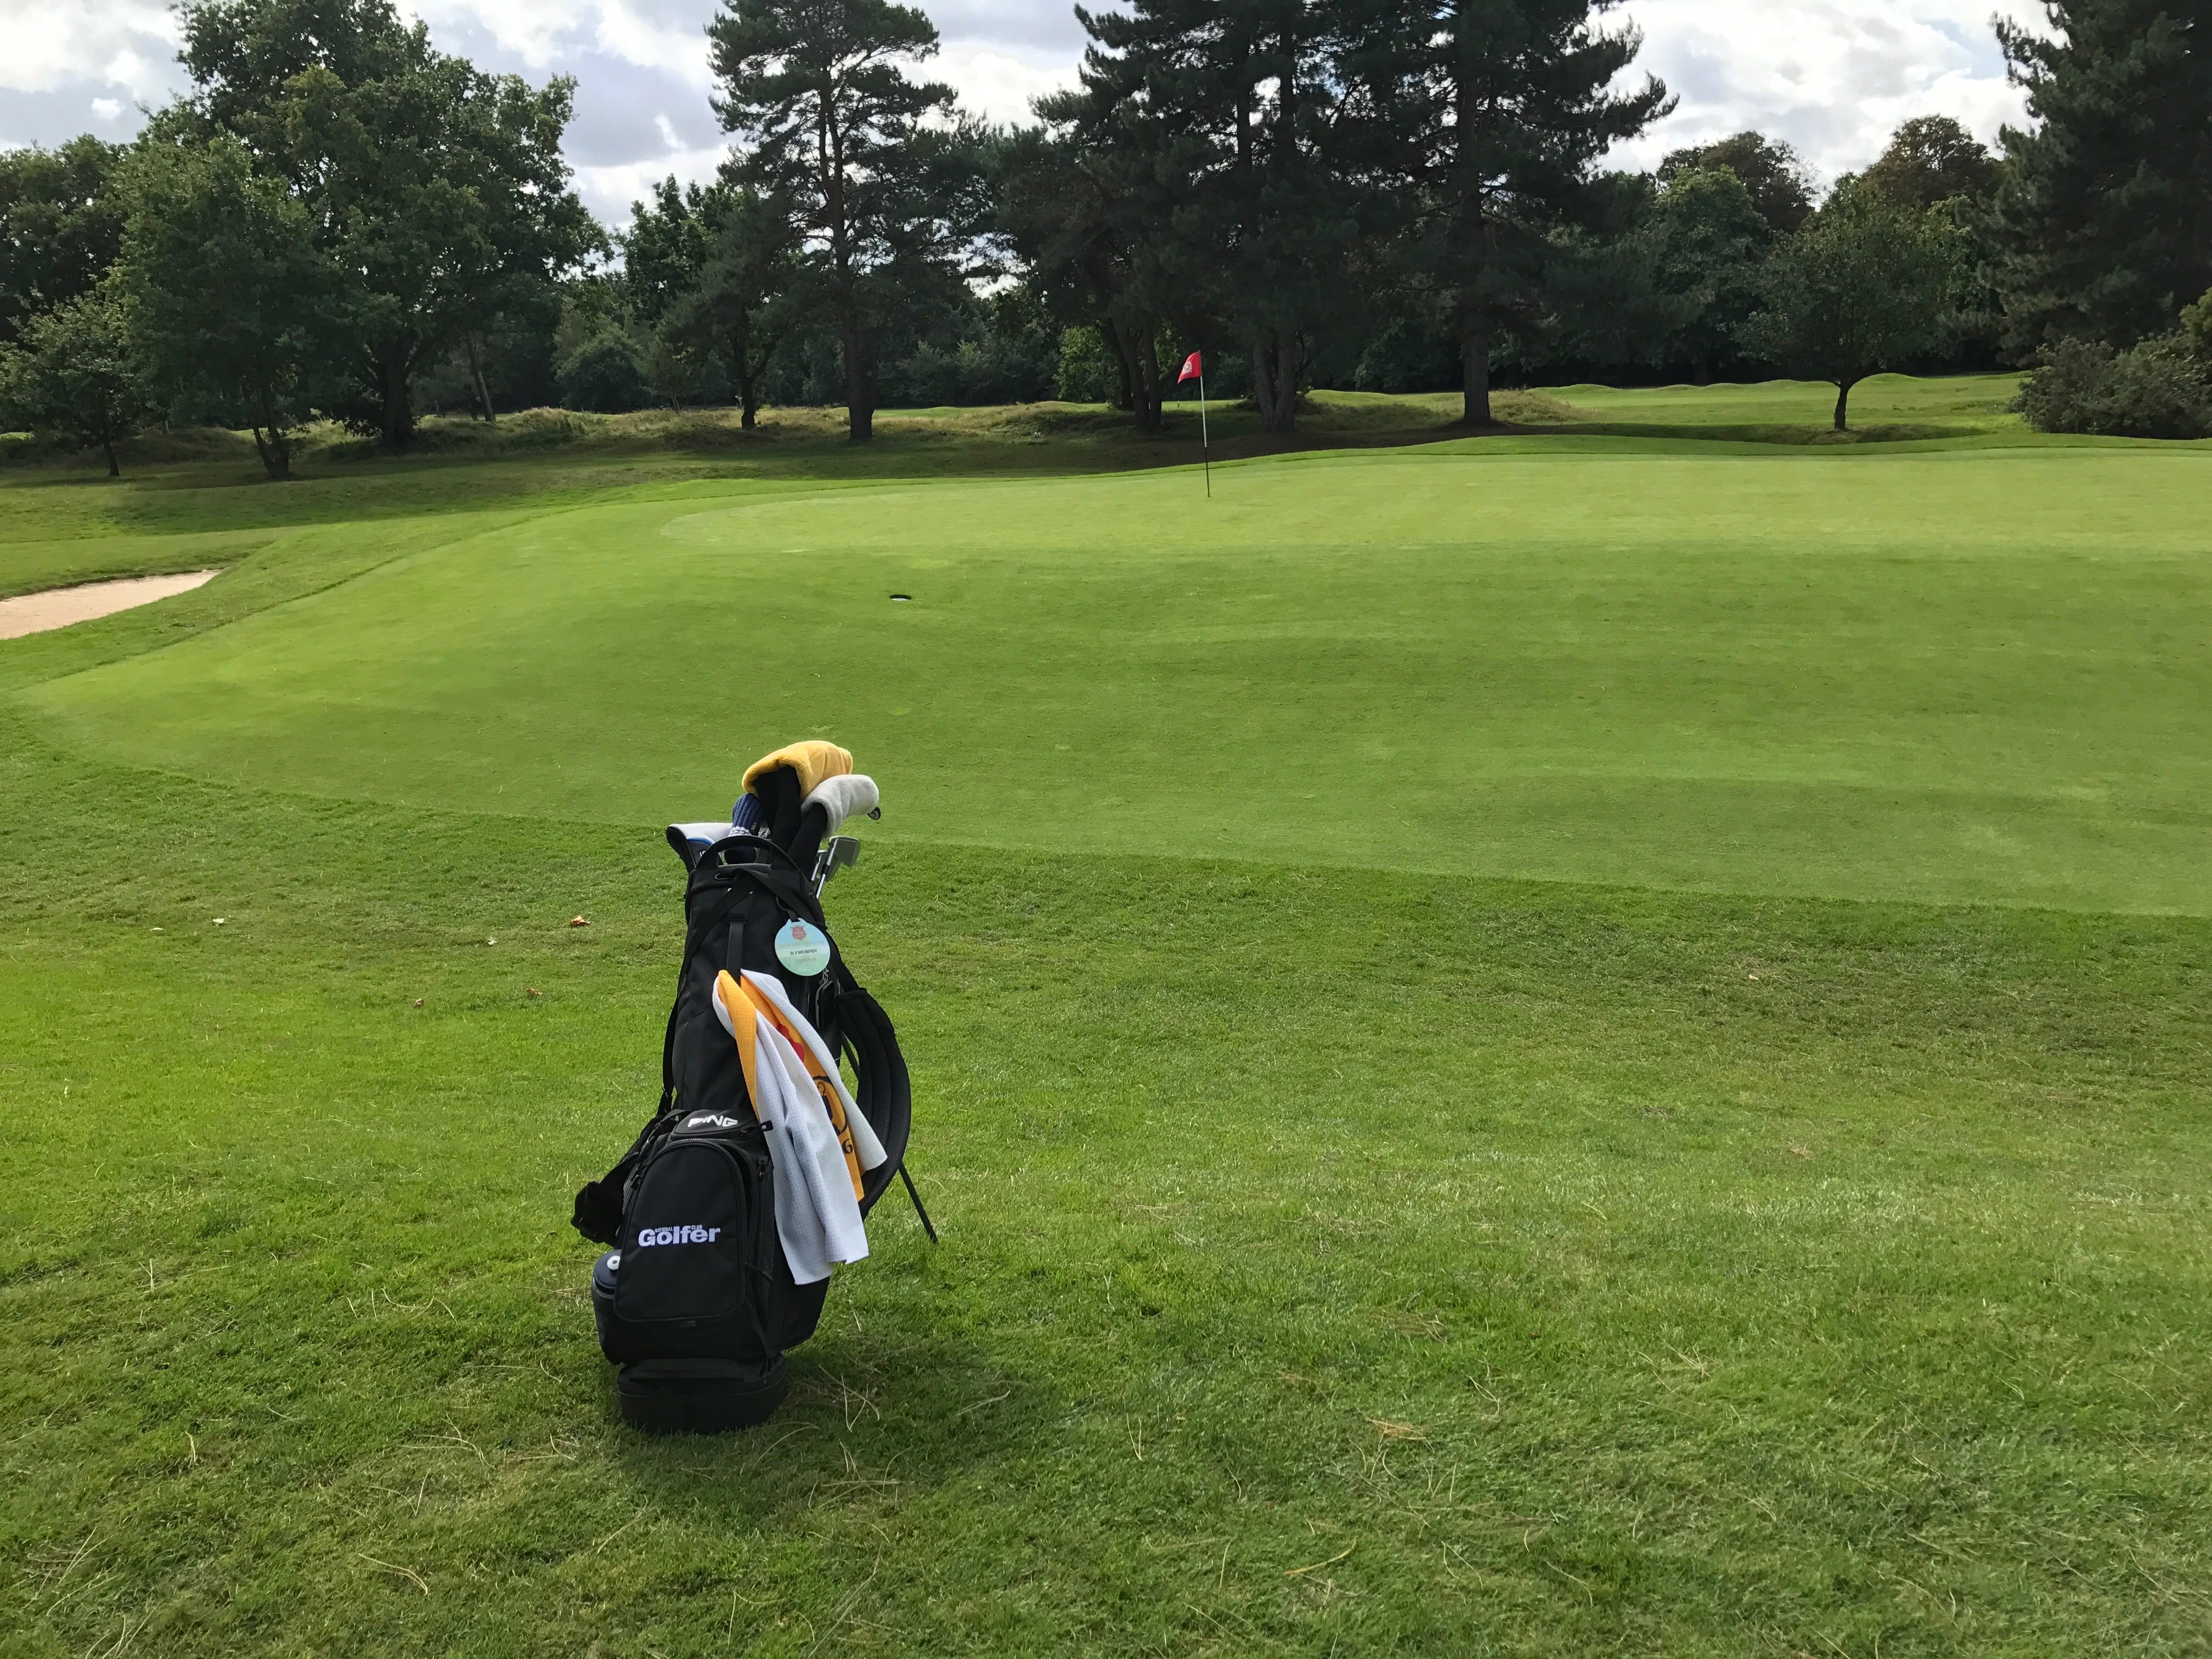 Royal Mid-Surrey golf